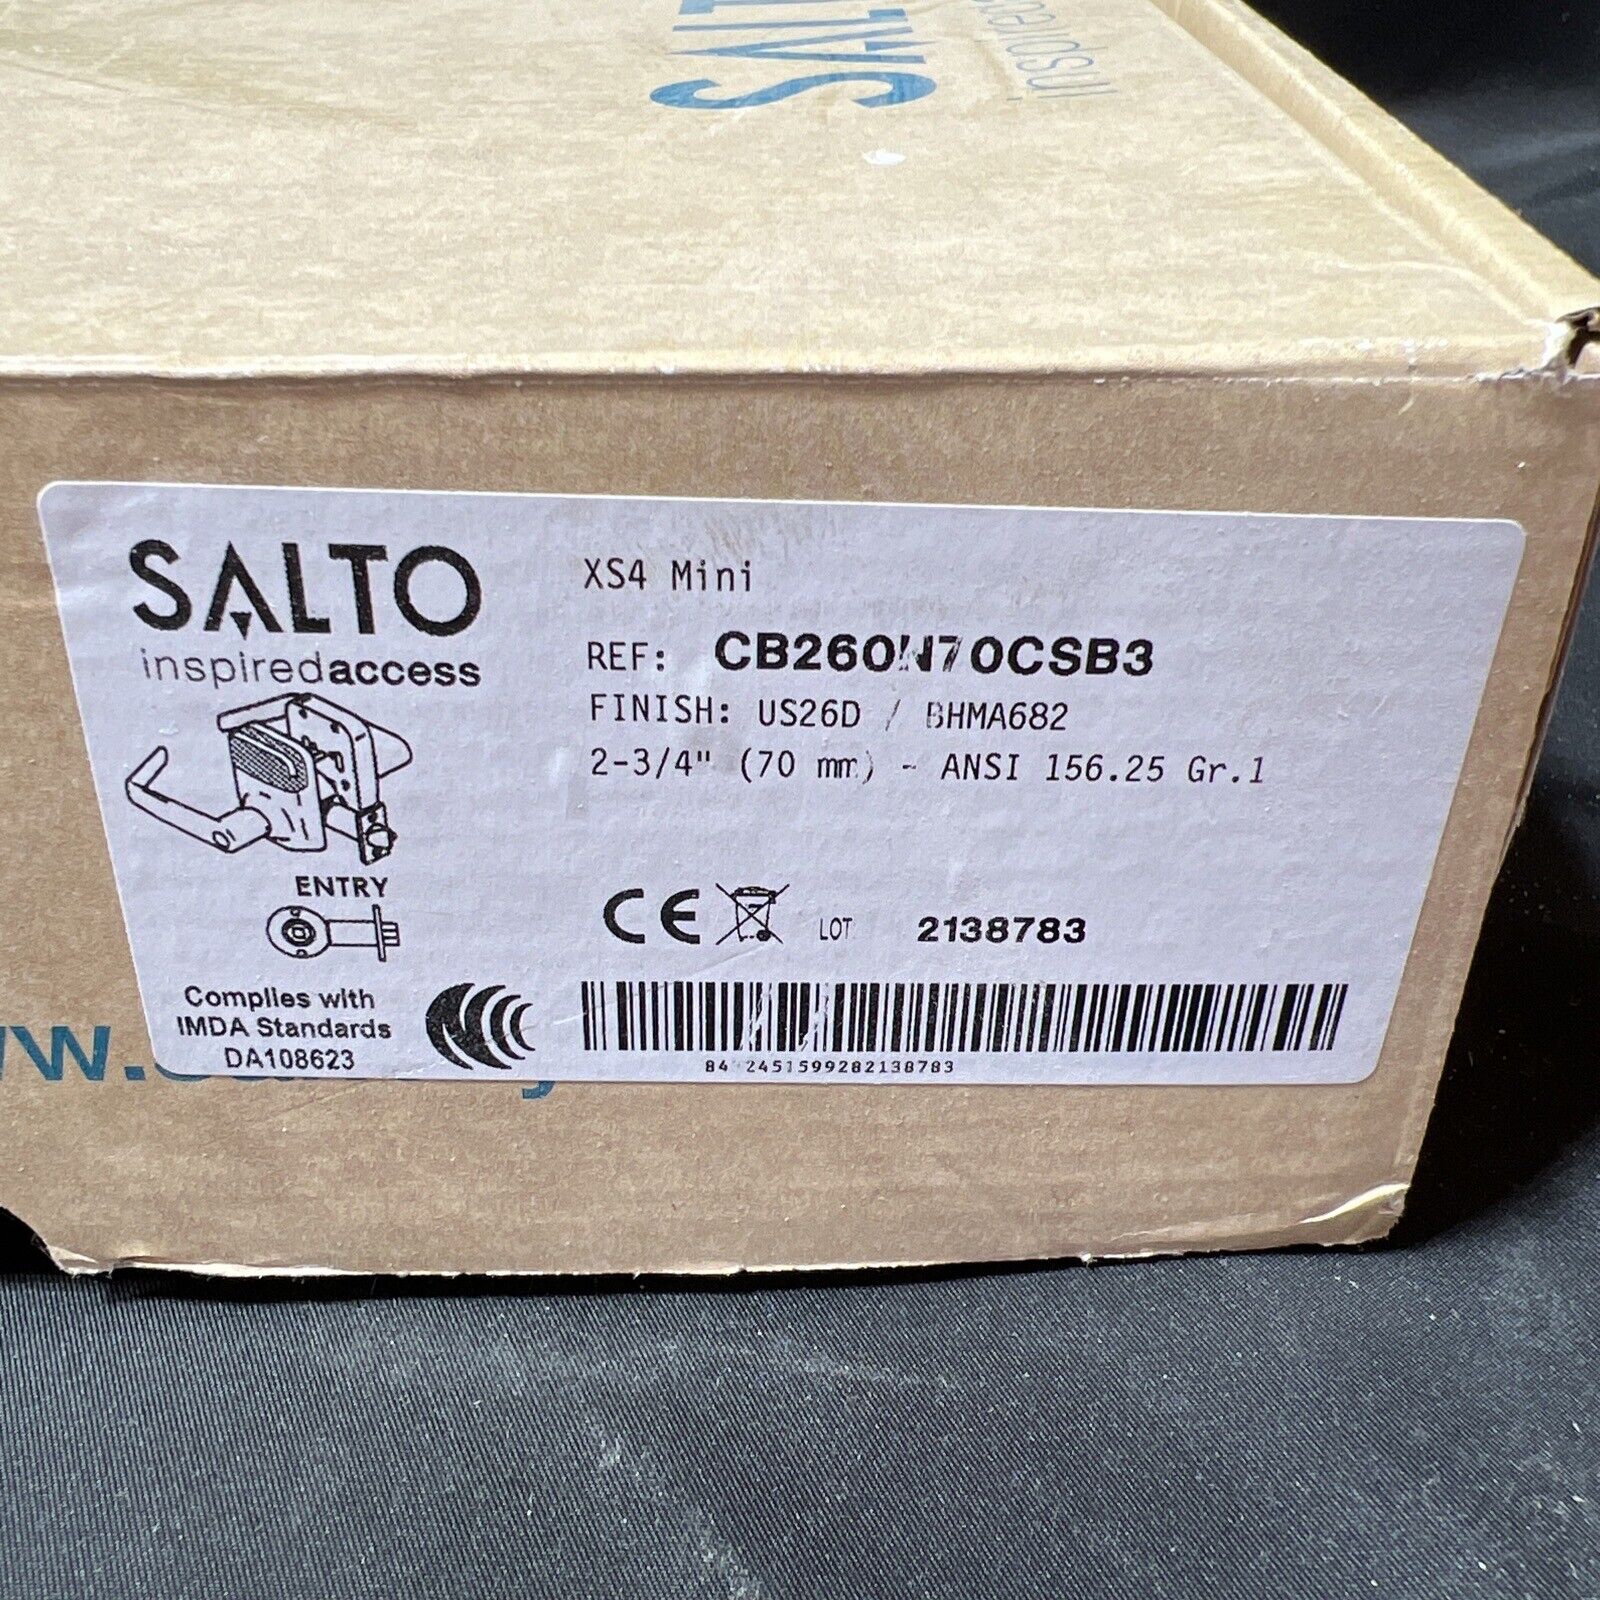 Salto XS4 Mini ANSI CB260N70CSB3 Finish US26D 2-3/4” Door Handle NEW WiFi Pad